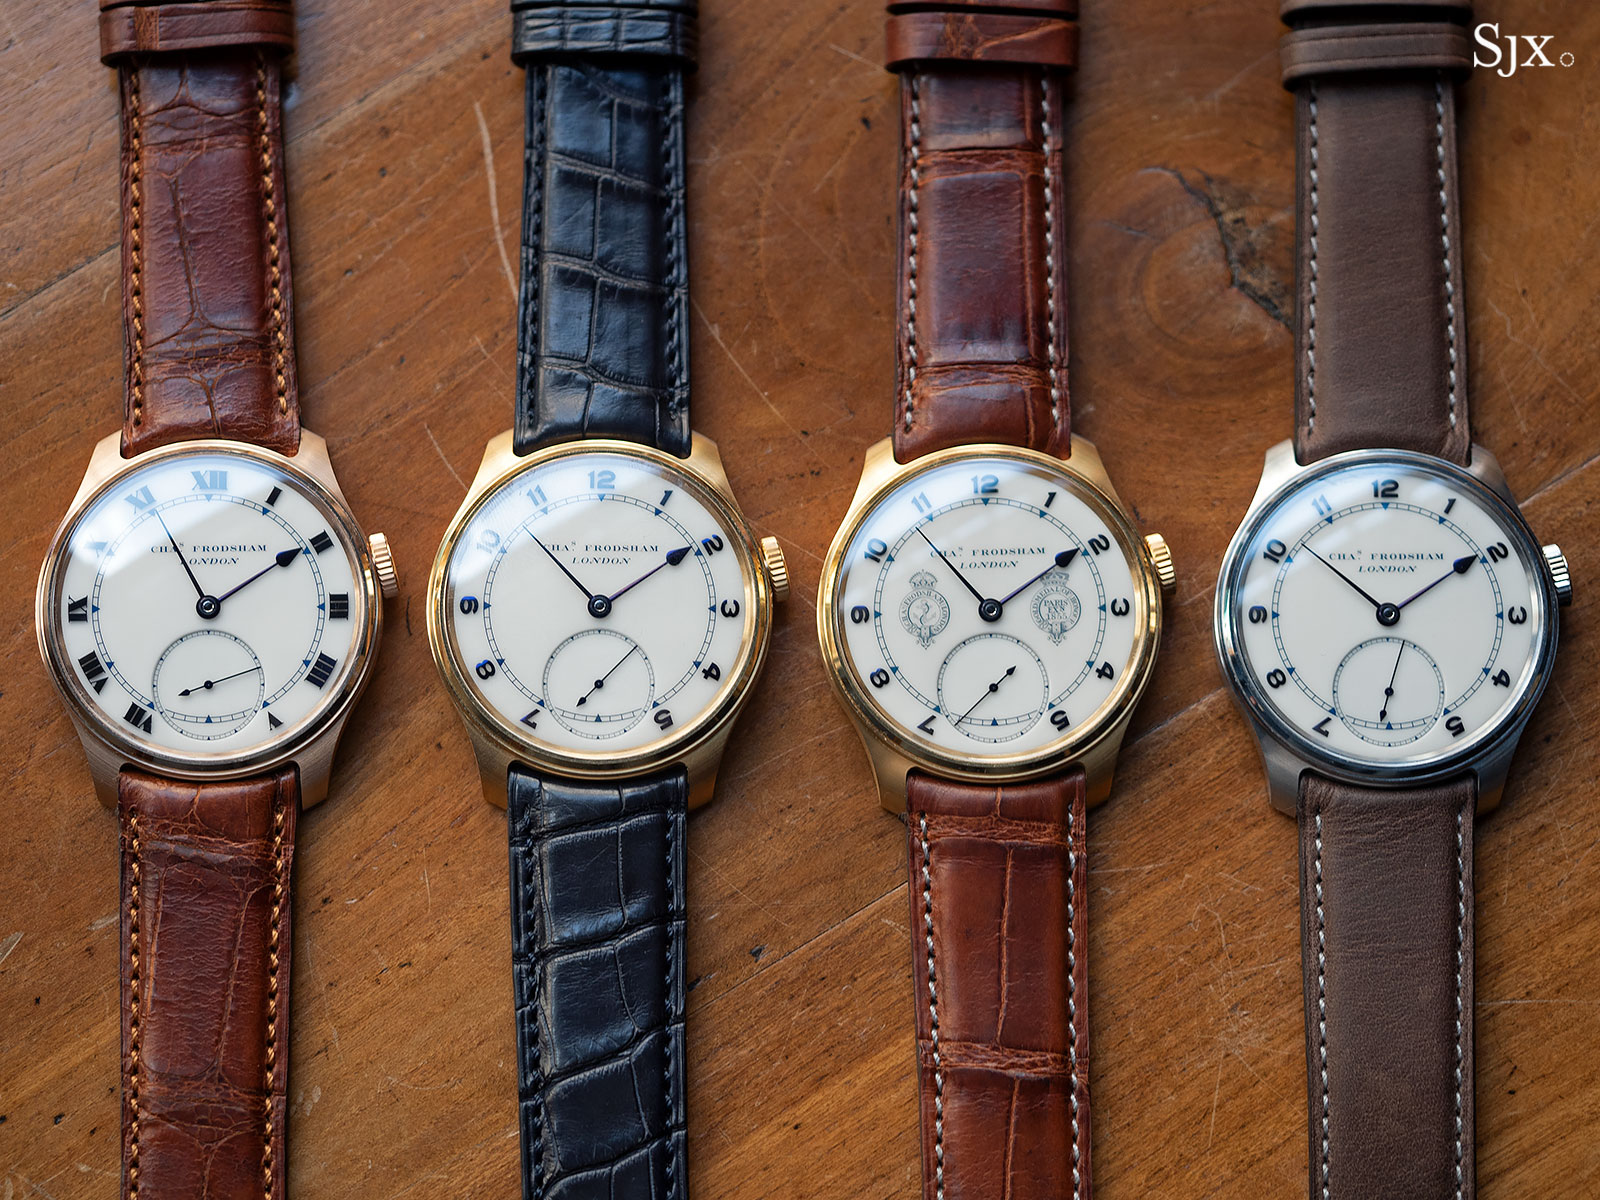 Charles Frodsham Double Impulse chronometer wristwatch 1